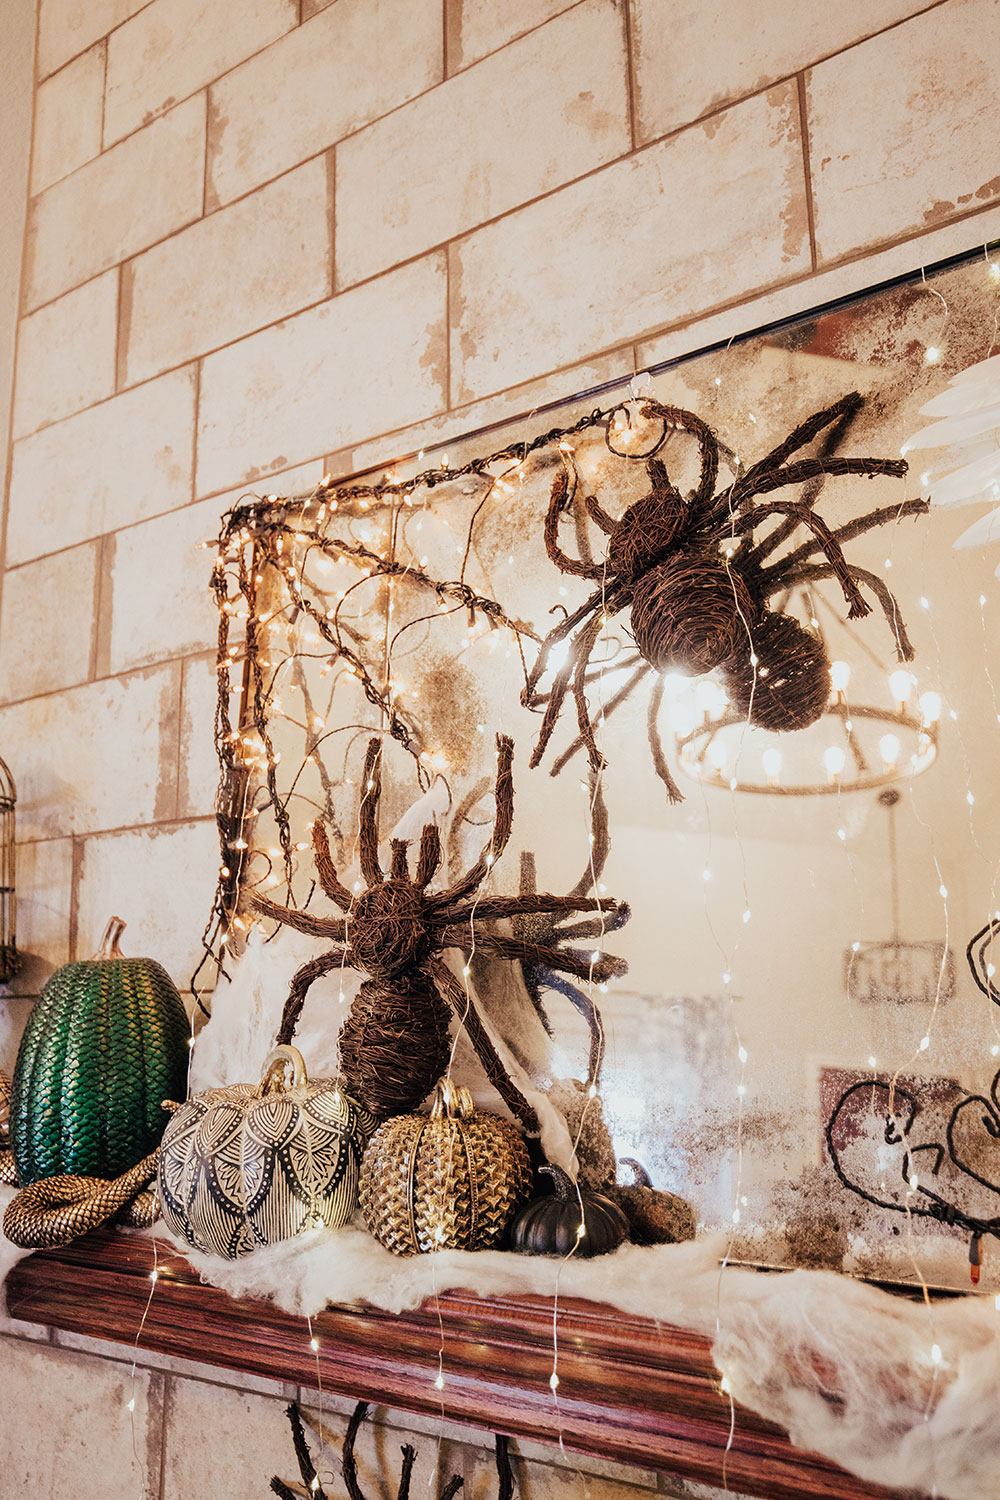 hagrid's spiders - harry potter halloween decorations